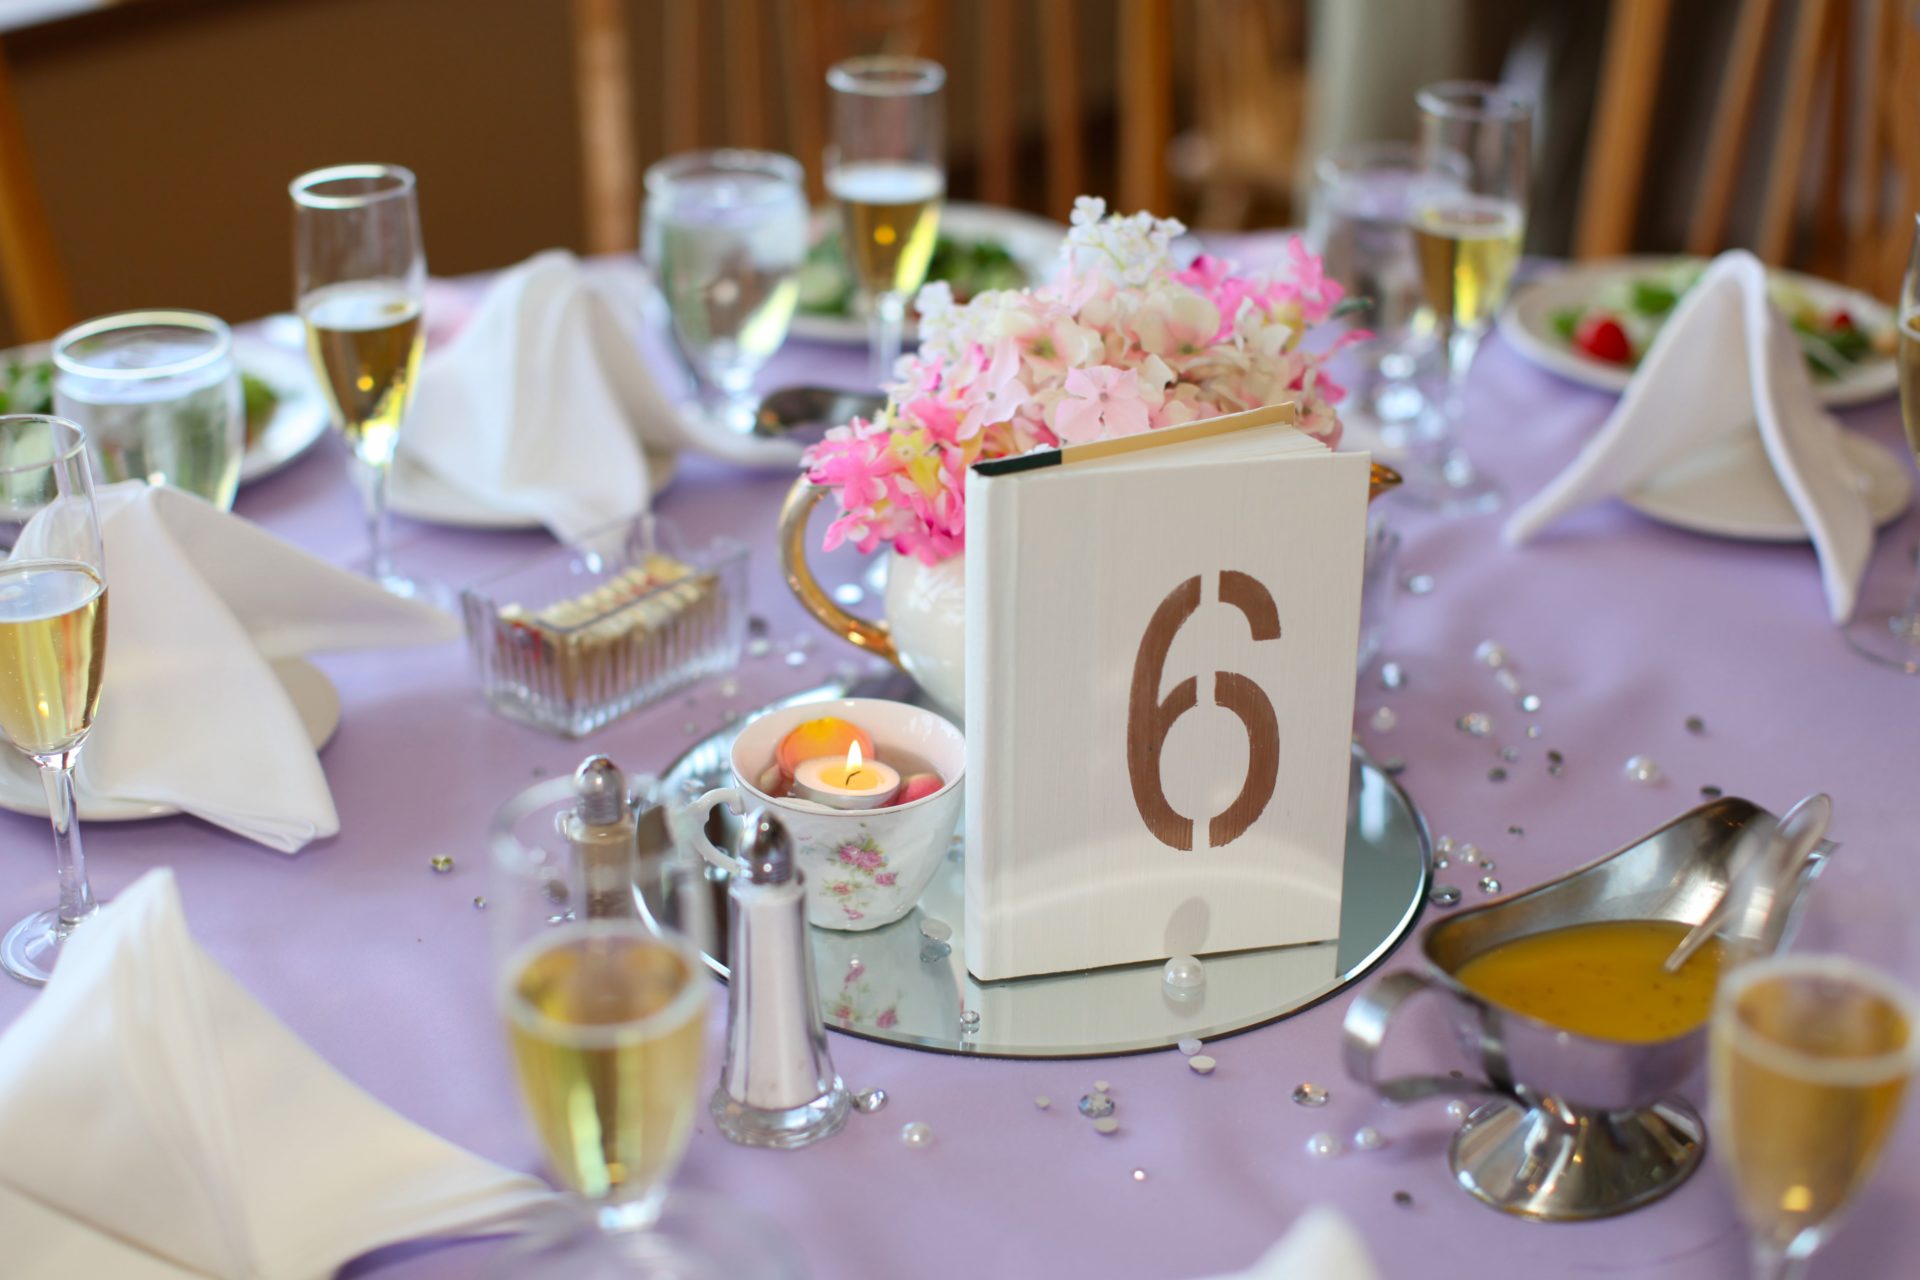 Tea party theme wedding table centerpiece idea